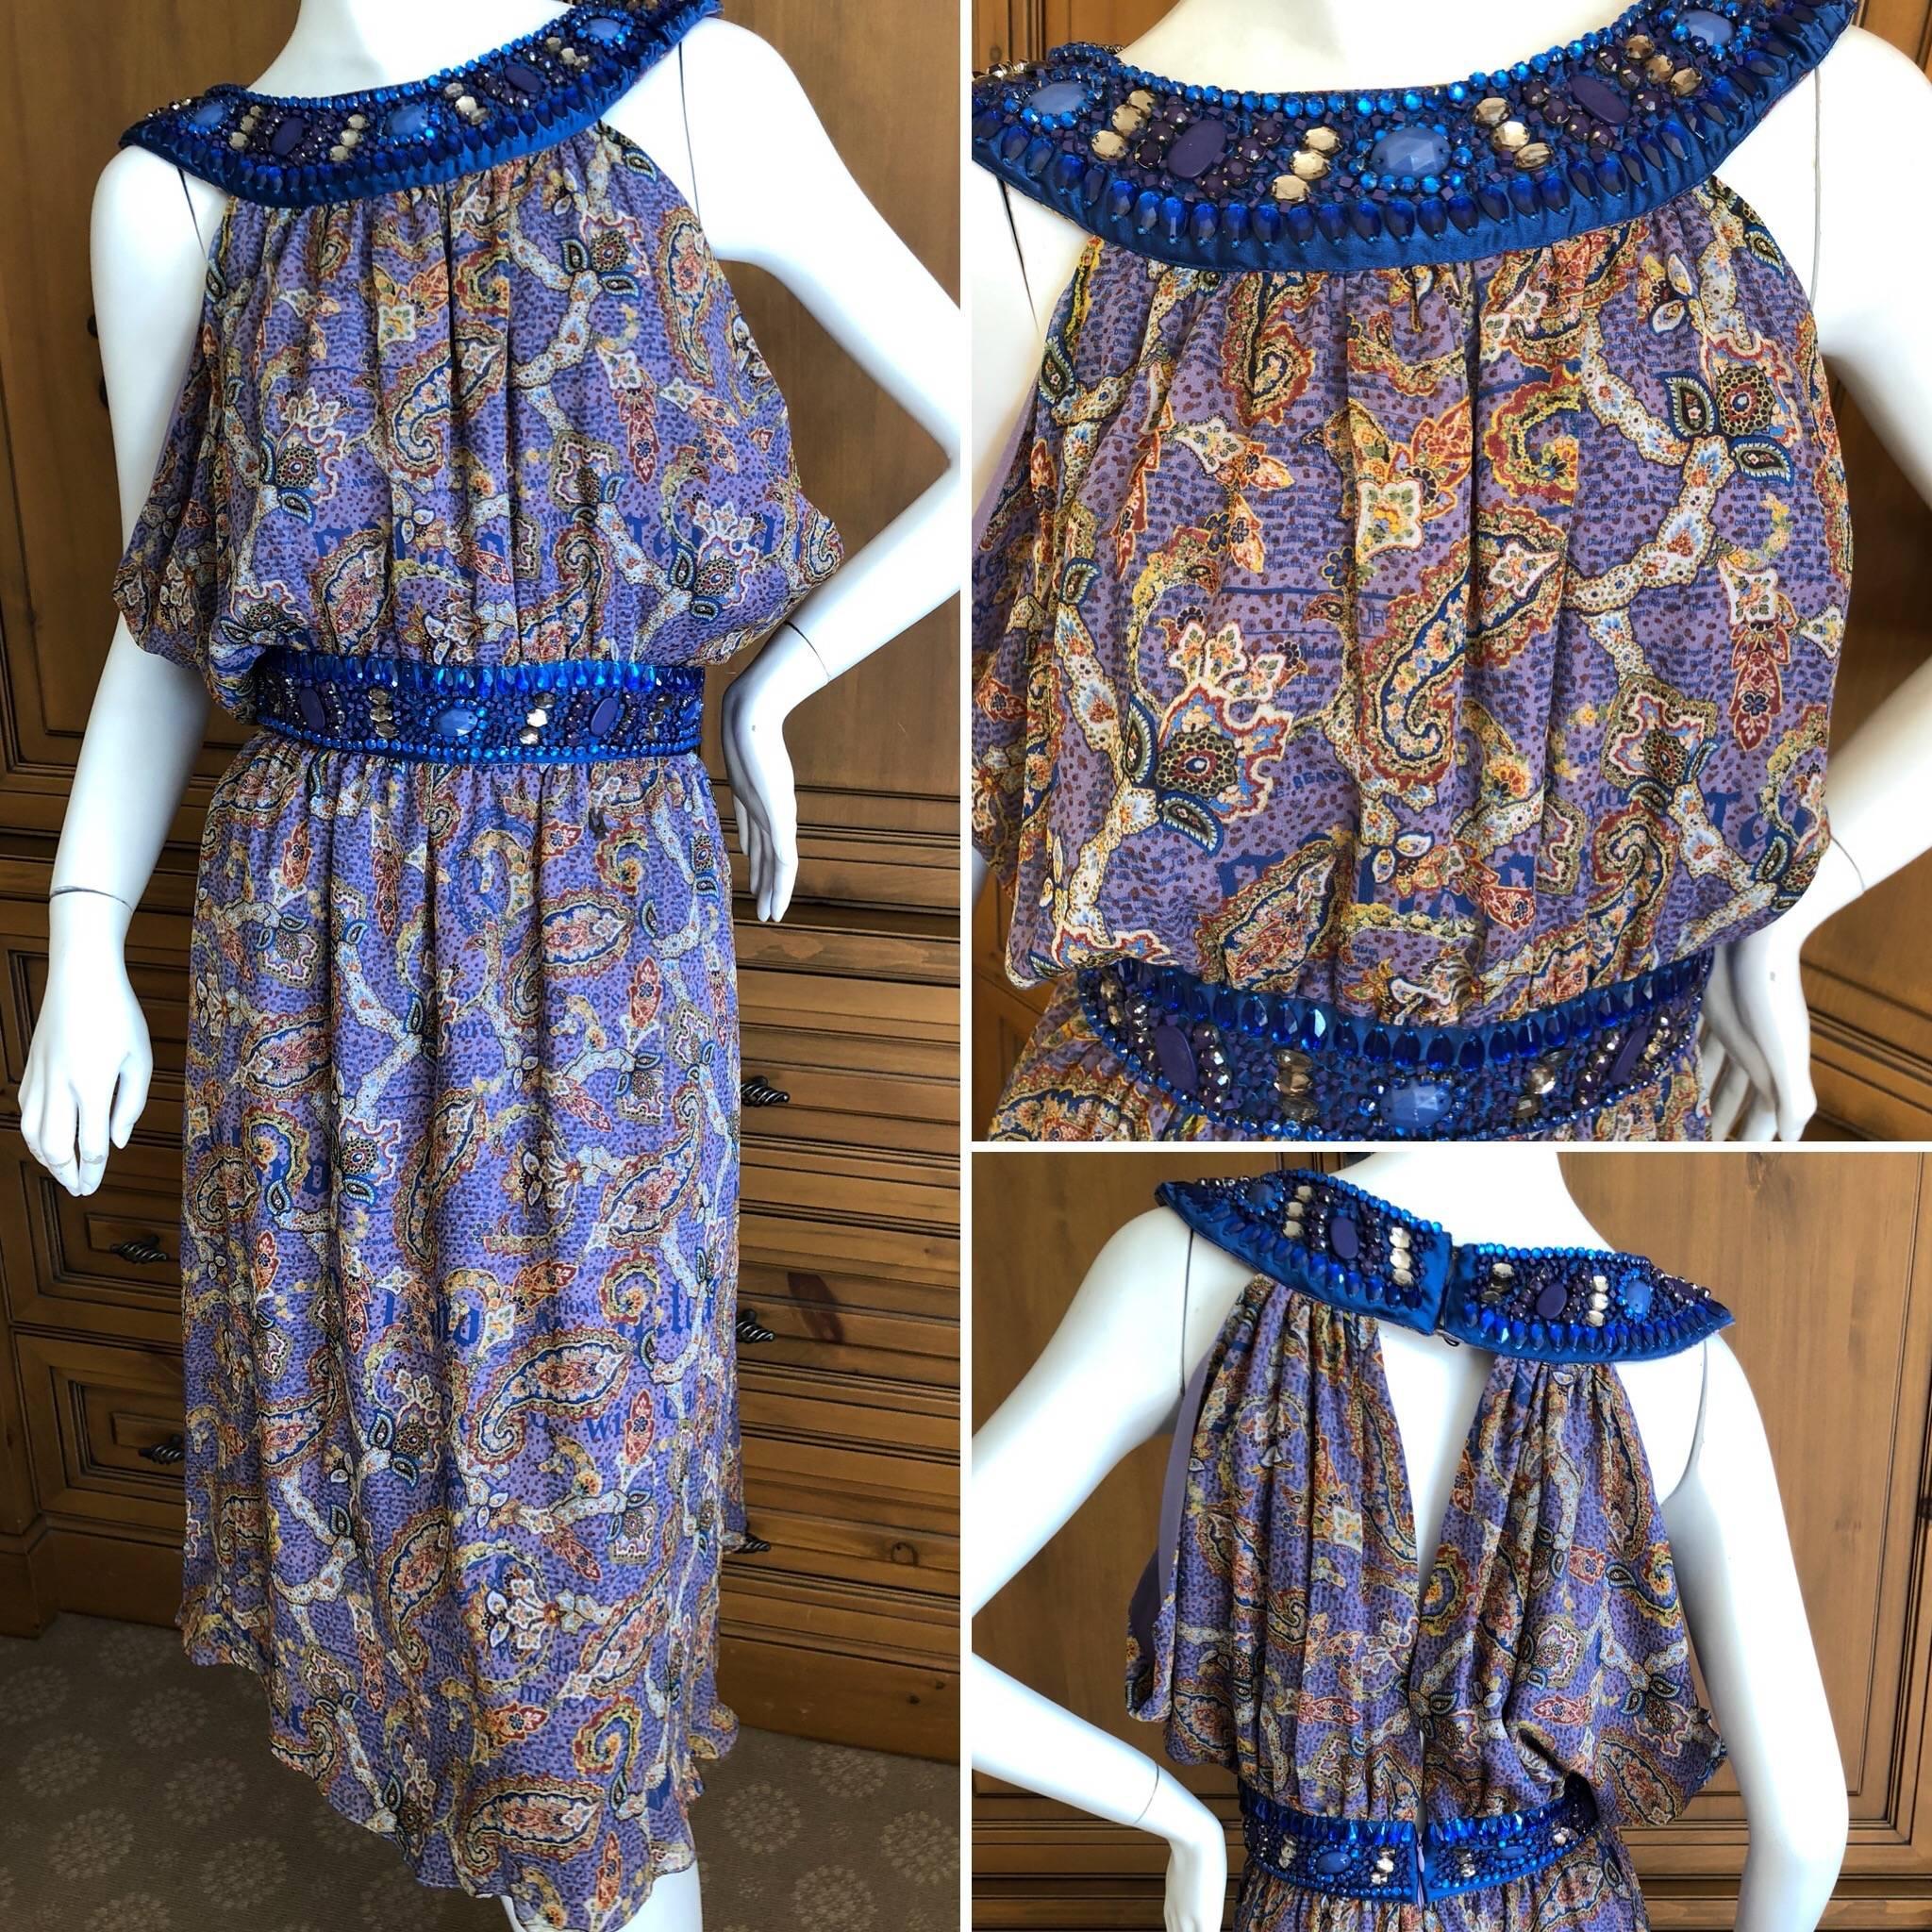 John Galliano Exquisite Jewel Embellished Silk Paisley Dress 
NWT 
Size 42
 Bust 46 
Waist 28